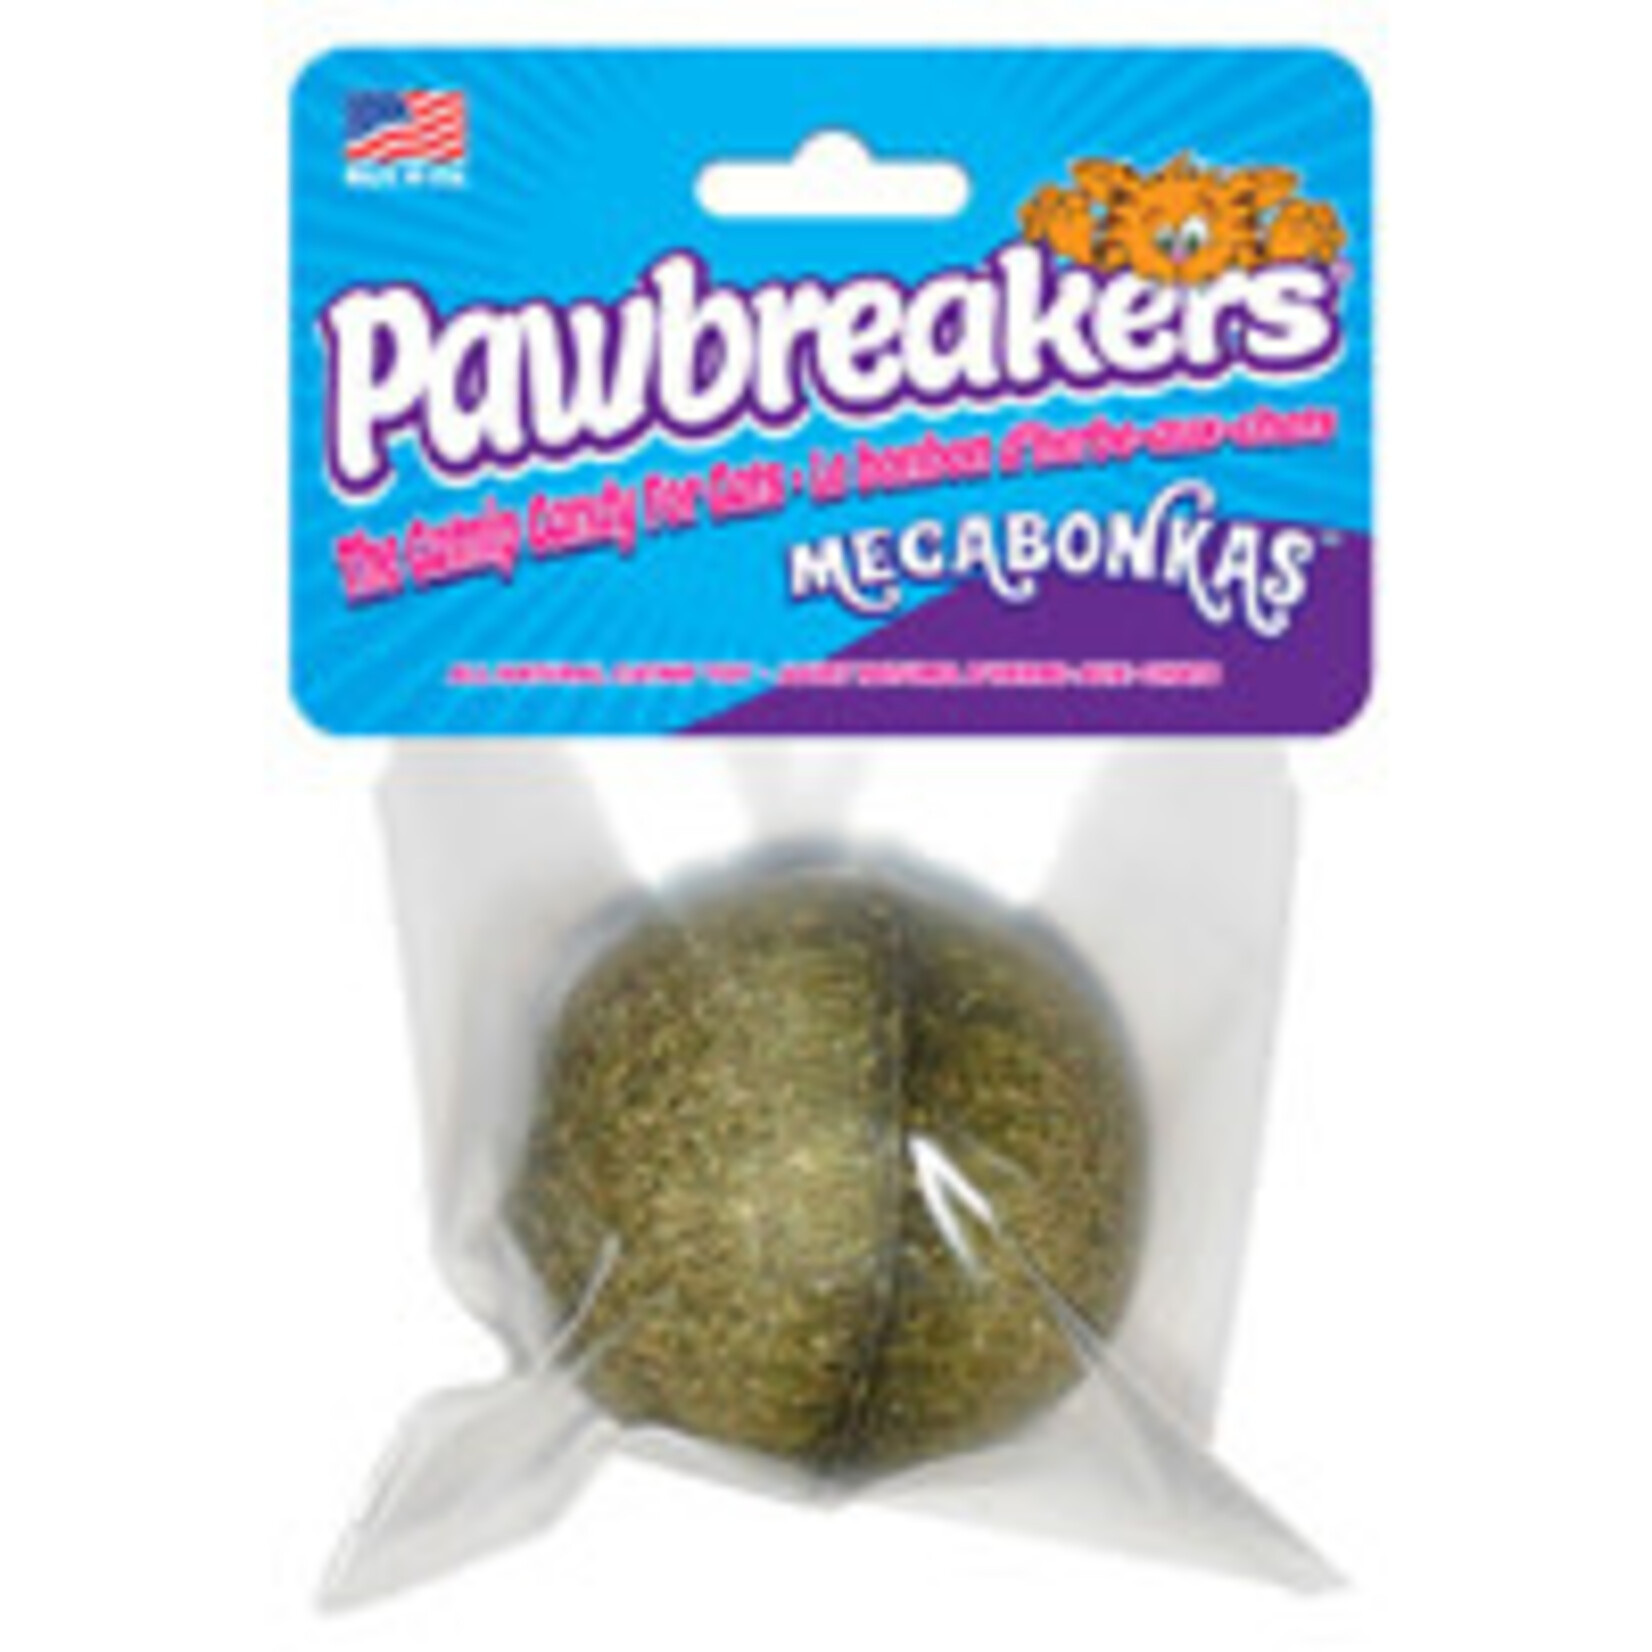 Pawbreakers Megabonkas – 99 g